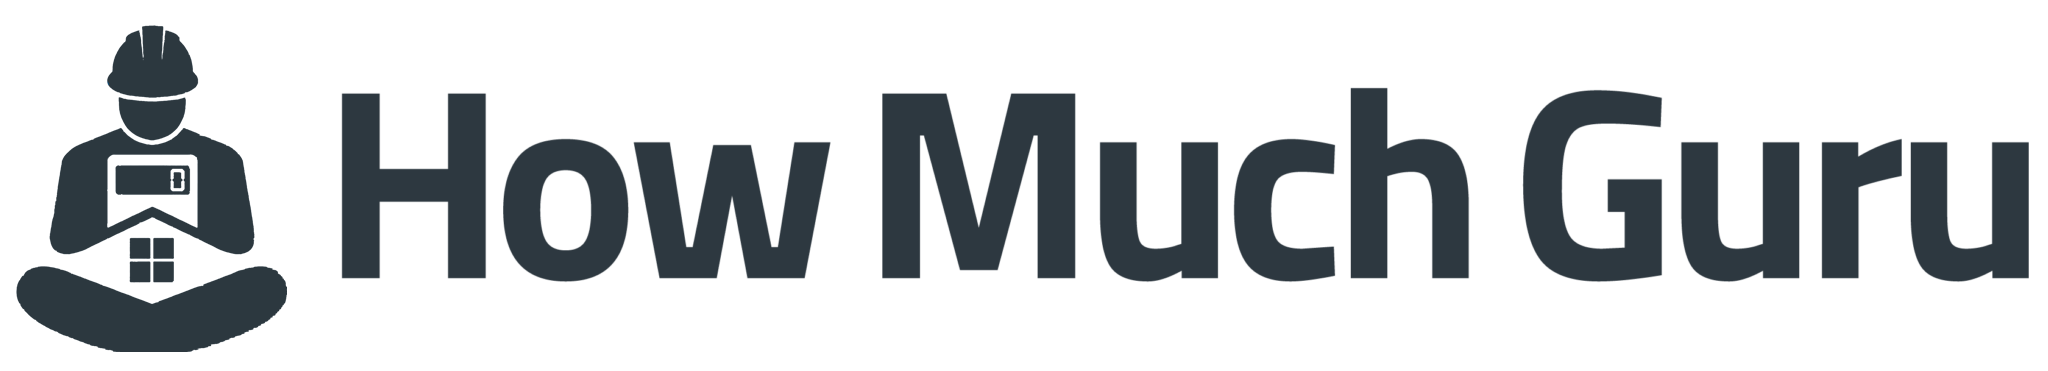 Guru Logo - How Much Guru Text